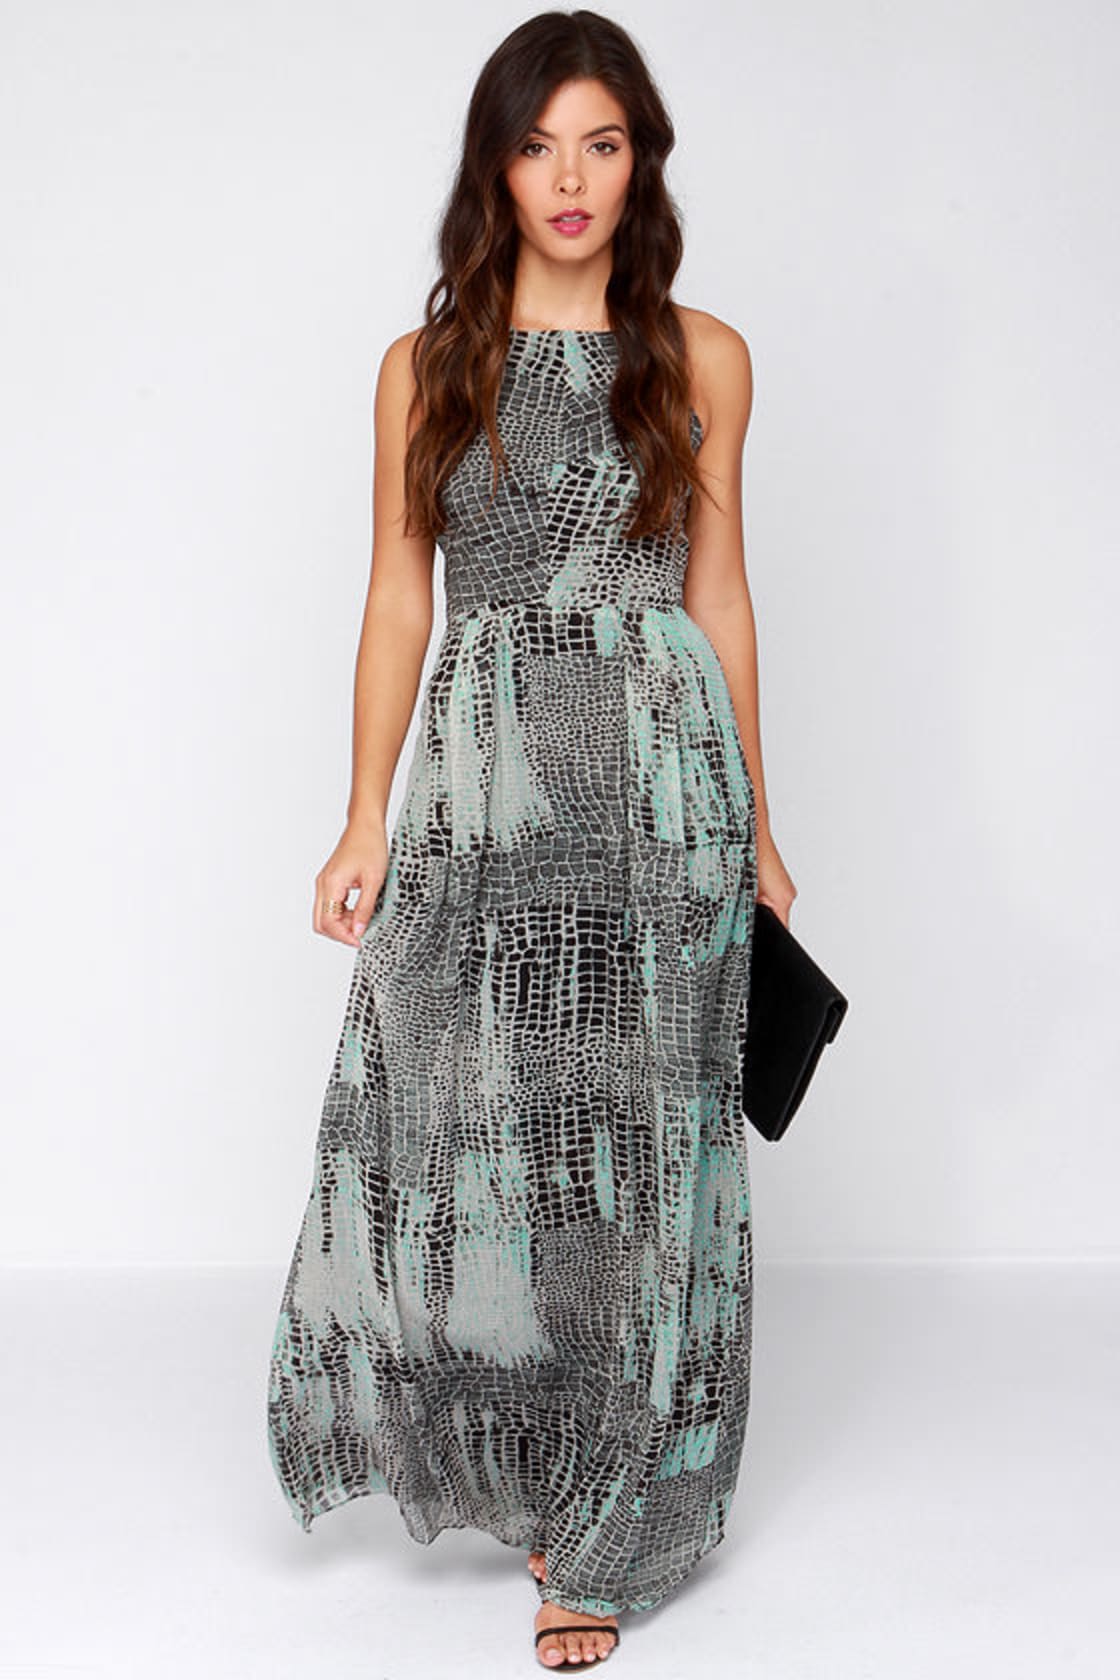 Maxi Dress - Chiffon Dress - Print Dress - Grey Dress - $99.00 - Lulus